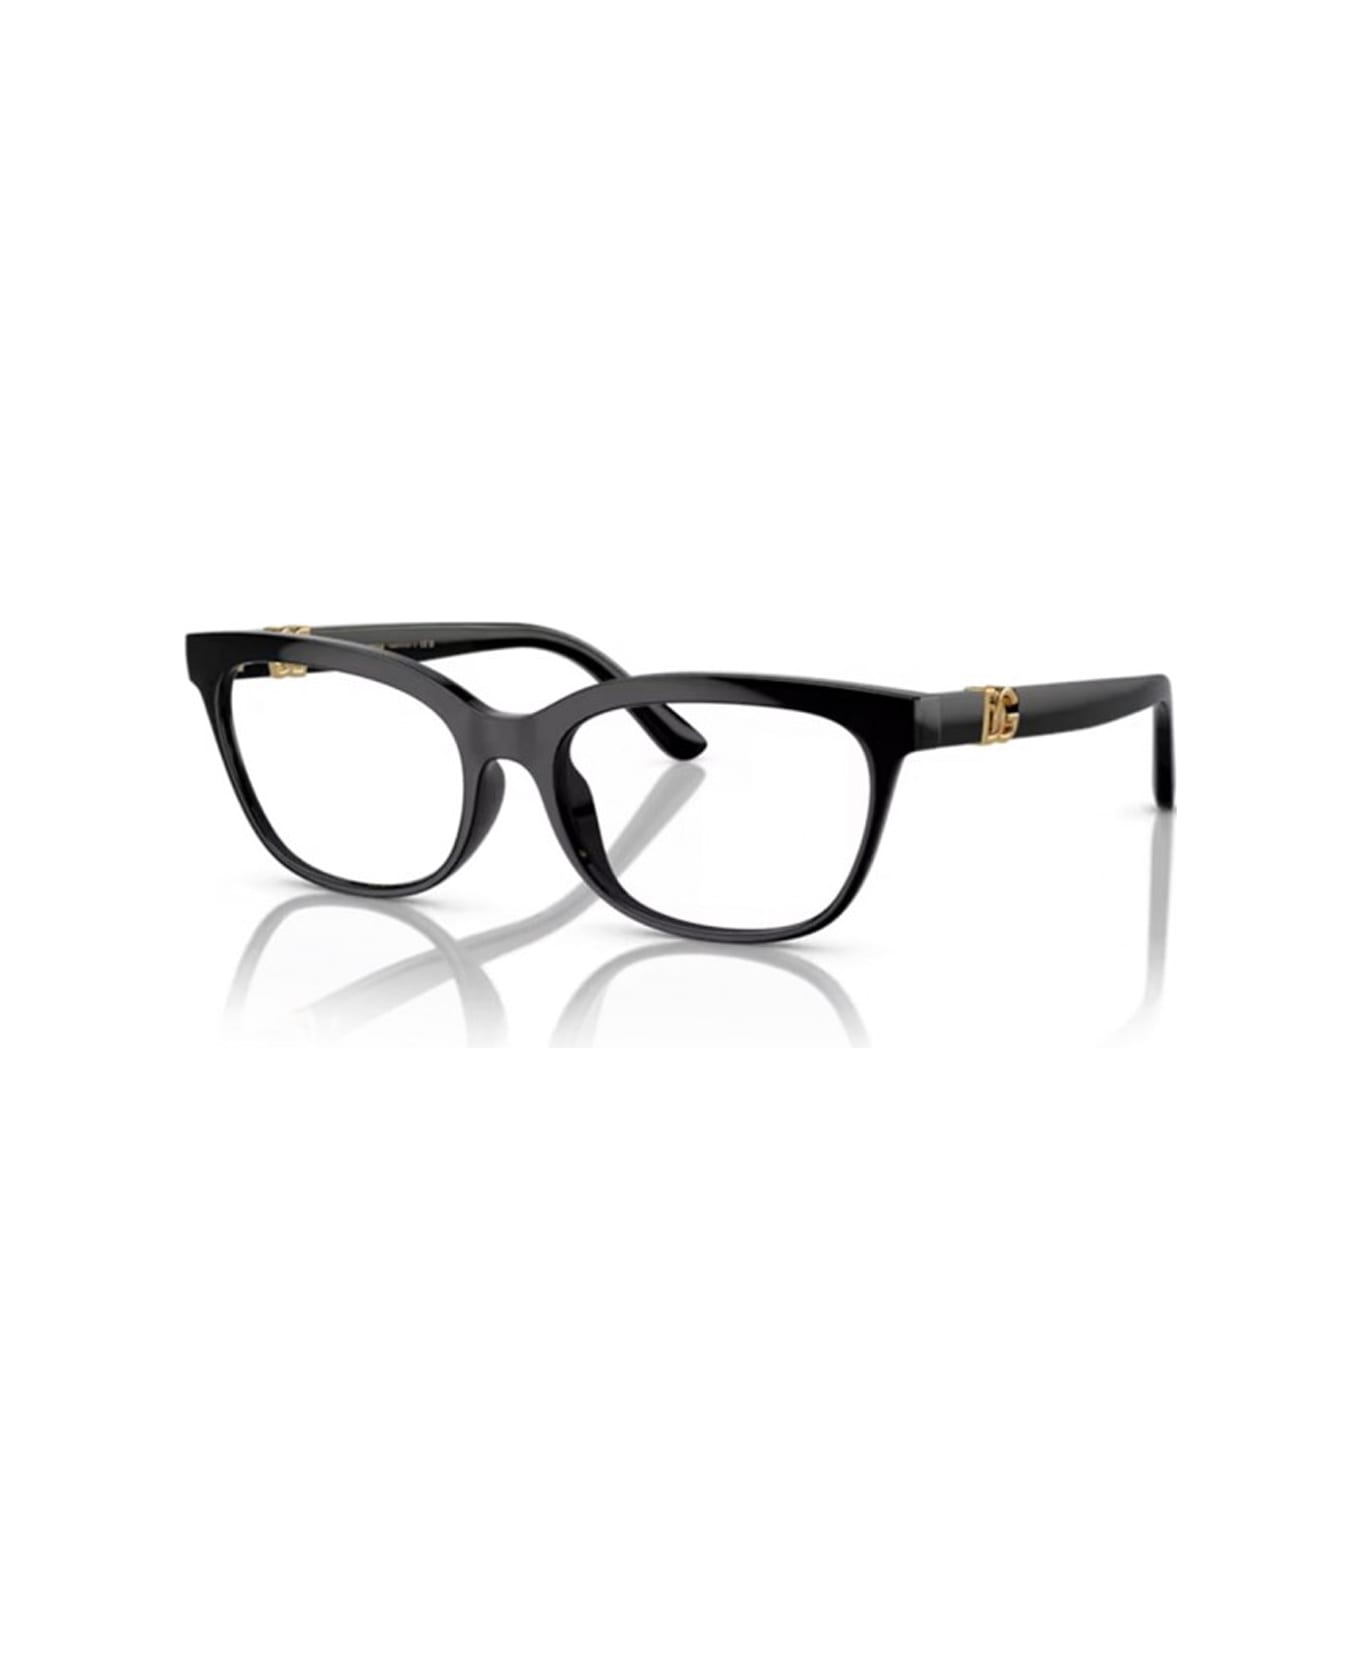 Dolce & Gabbana Eyewear Dg5106u 501 Glasses - Nero アイウェア